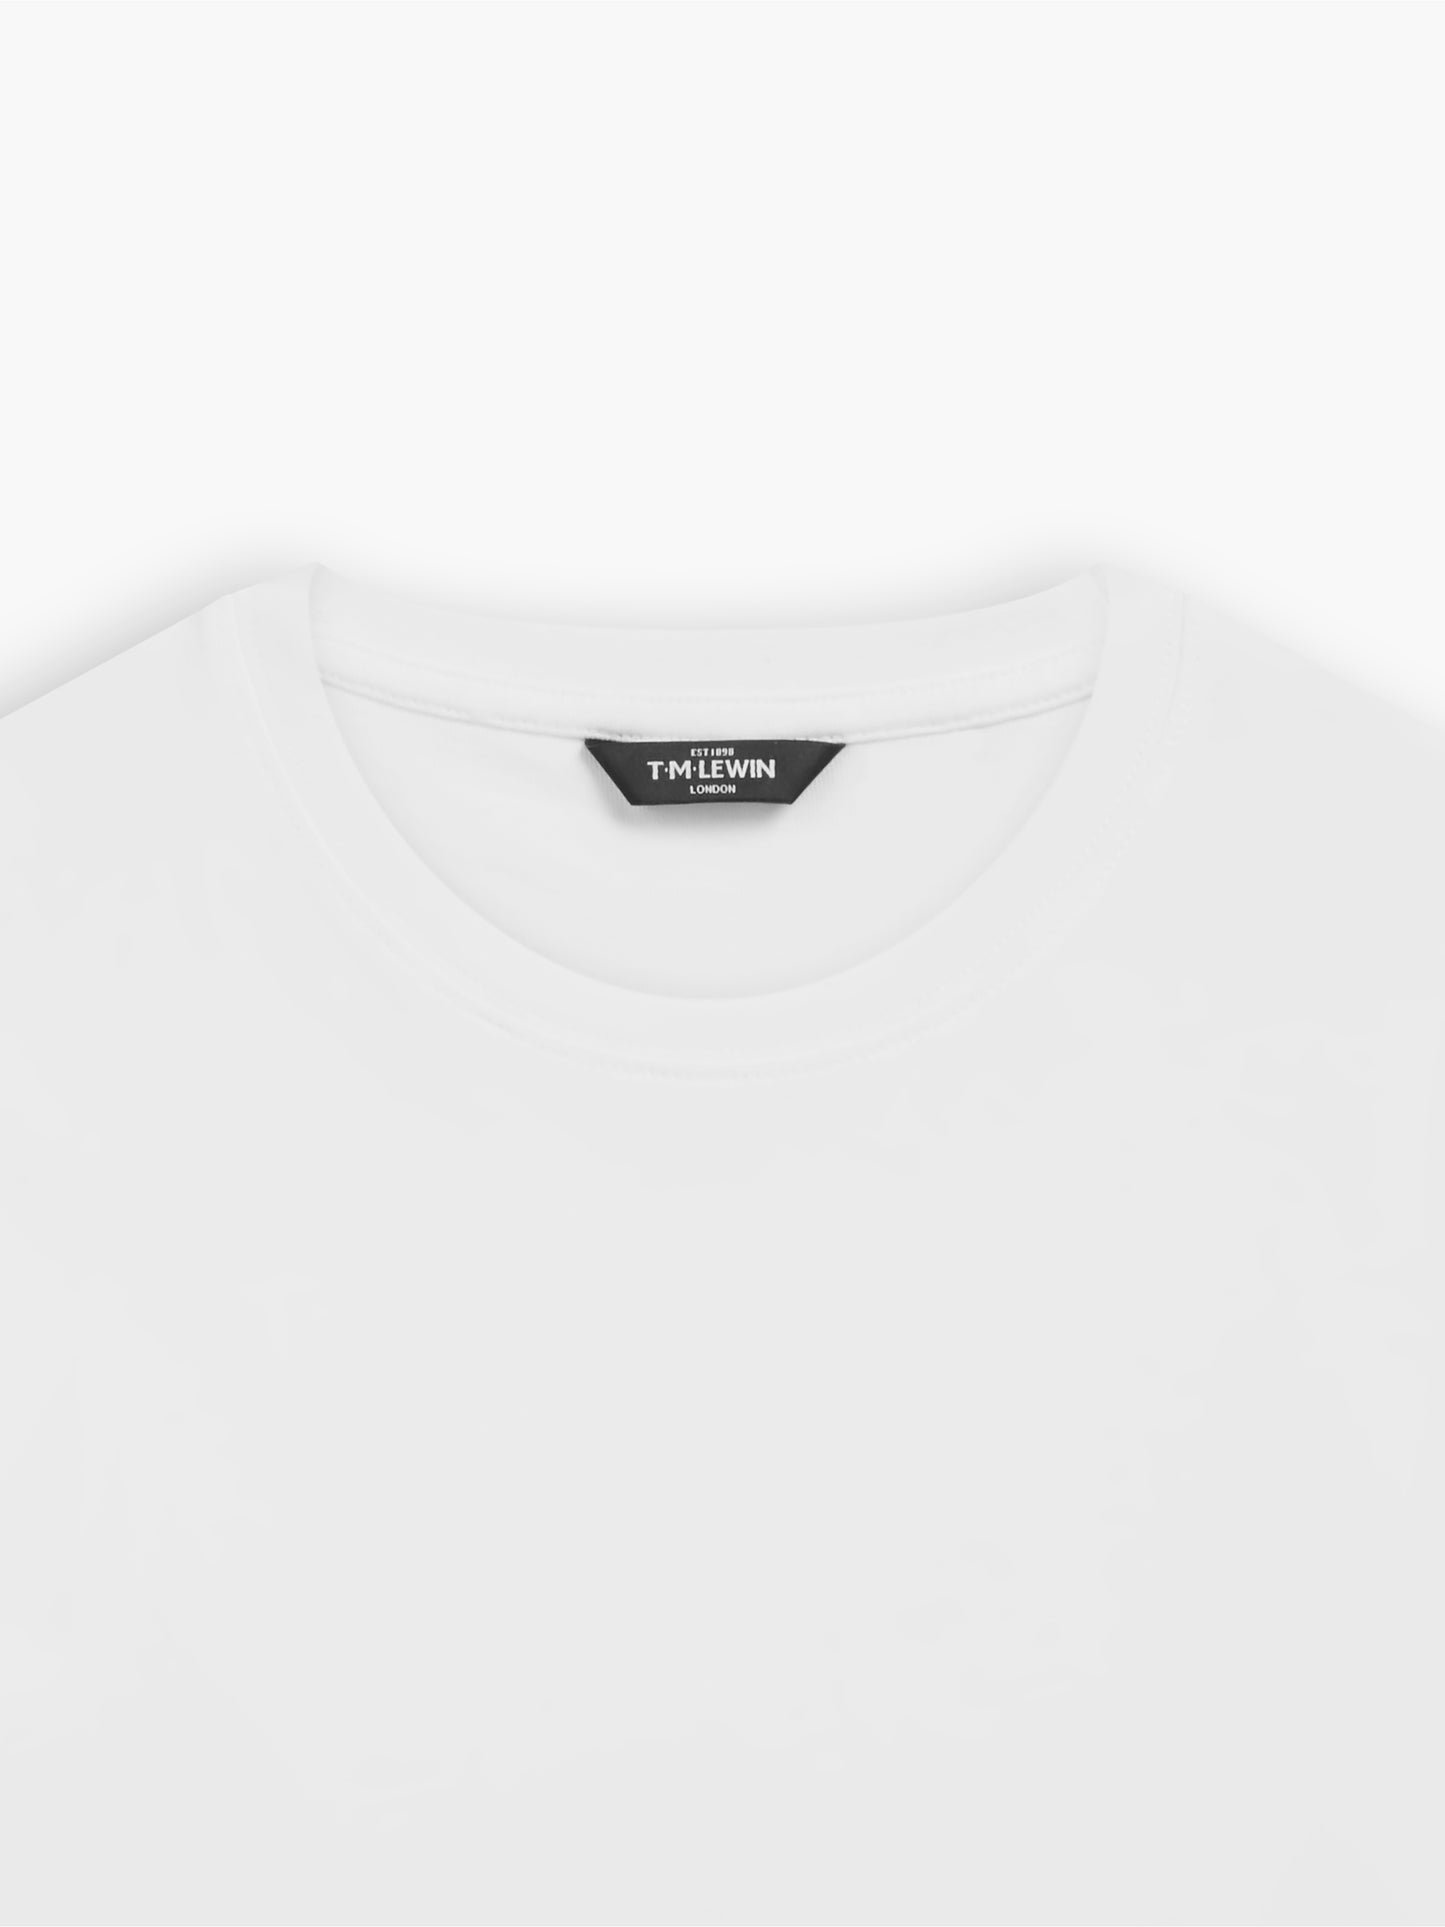 White Organic Cotton Crew Neck T-Shirt